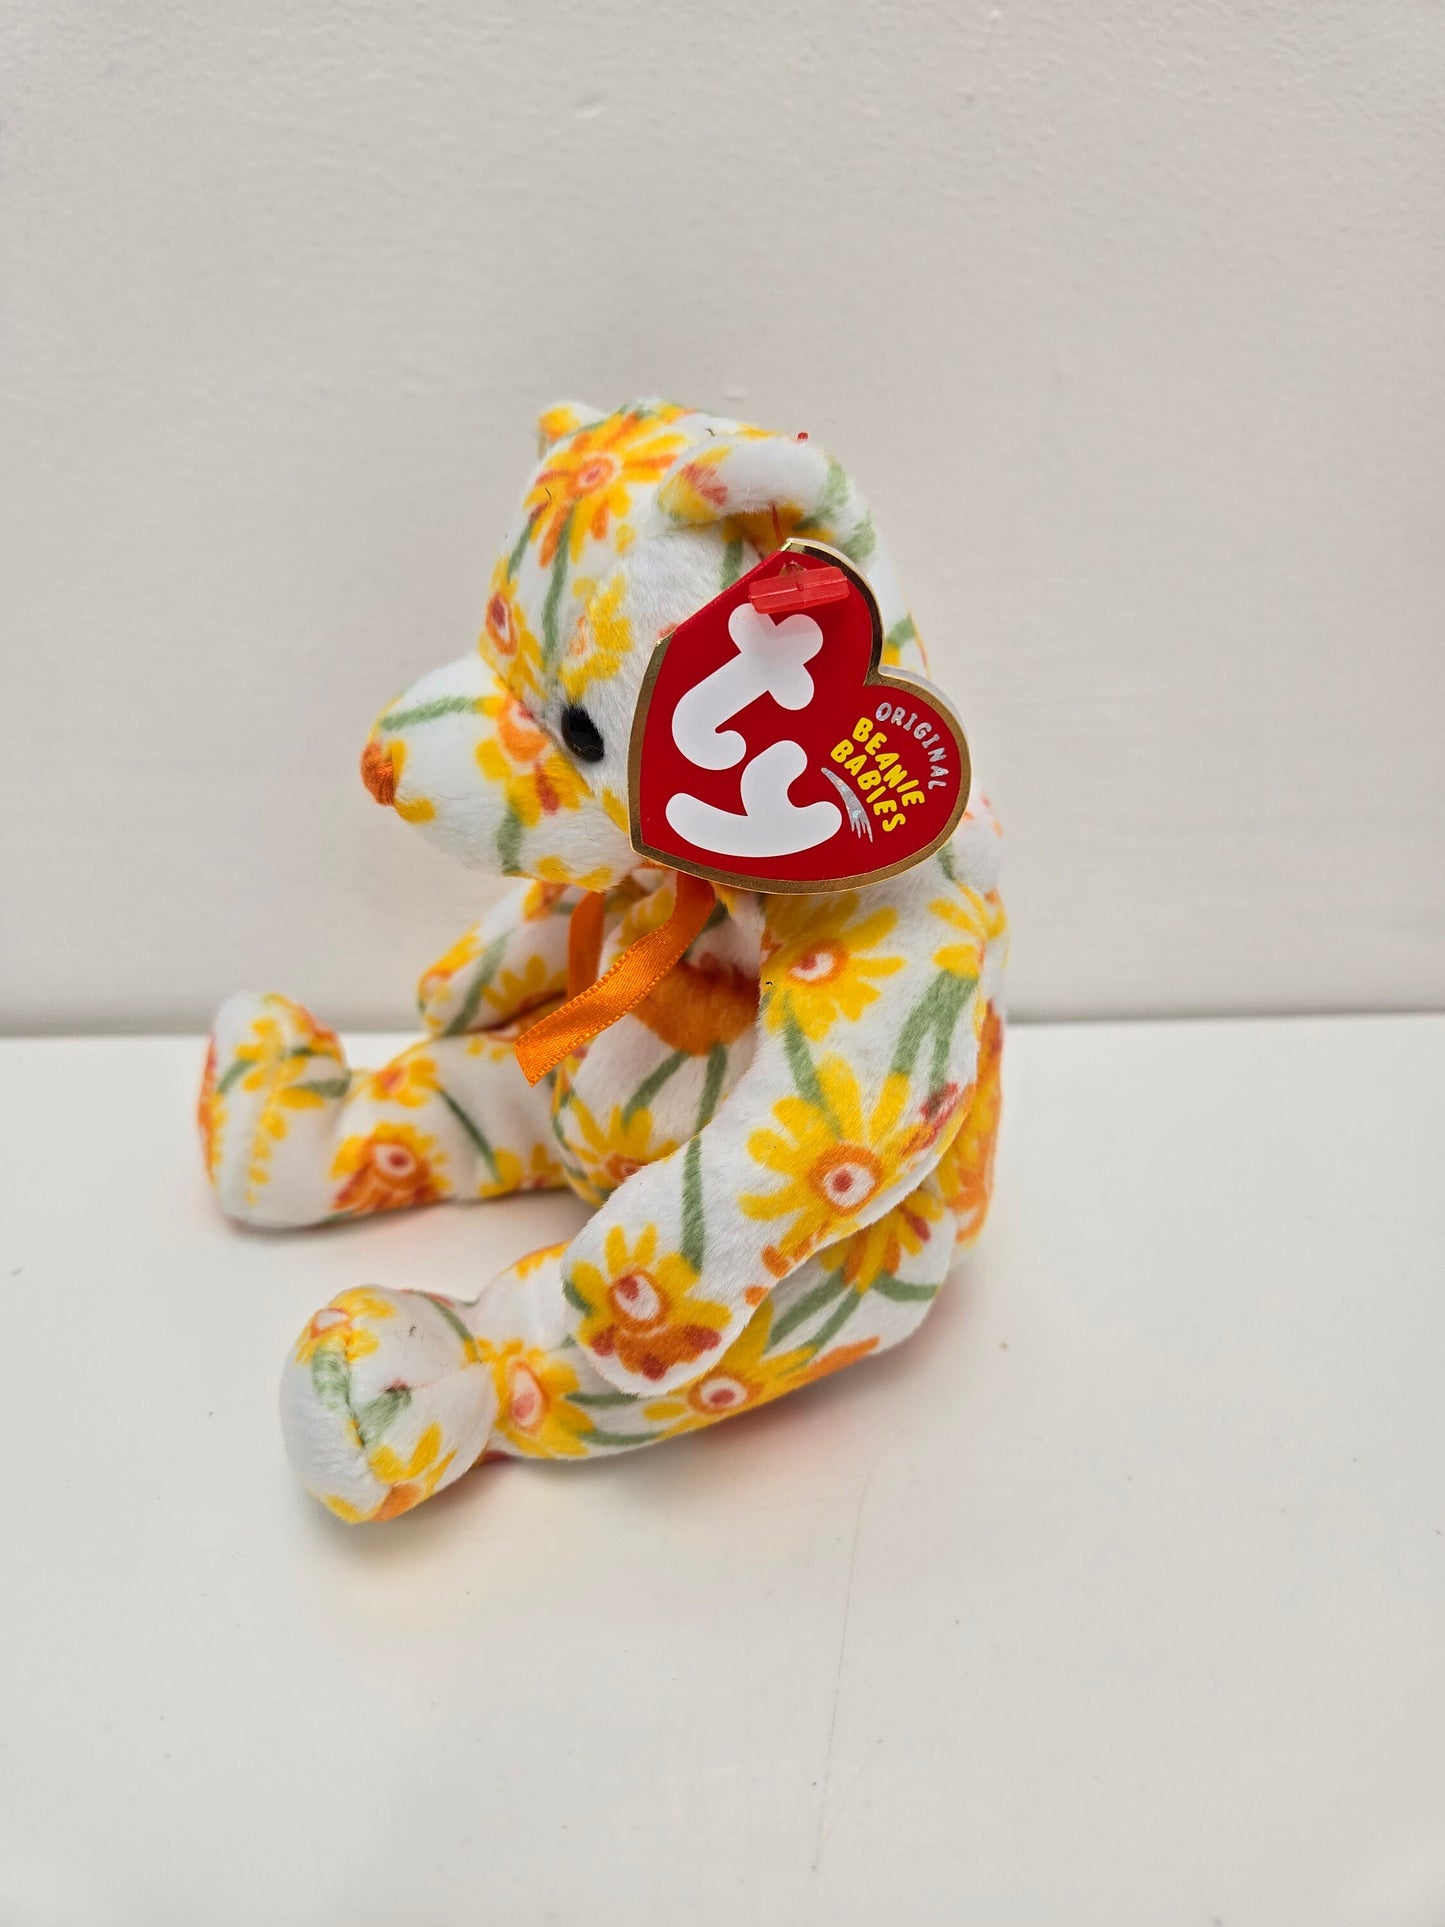 Ty Beanie Baby “Shasta” the Orange Floral Bear (7 inch)